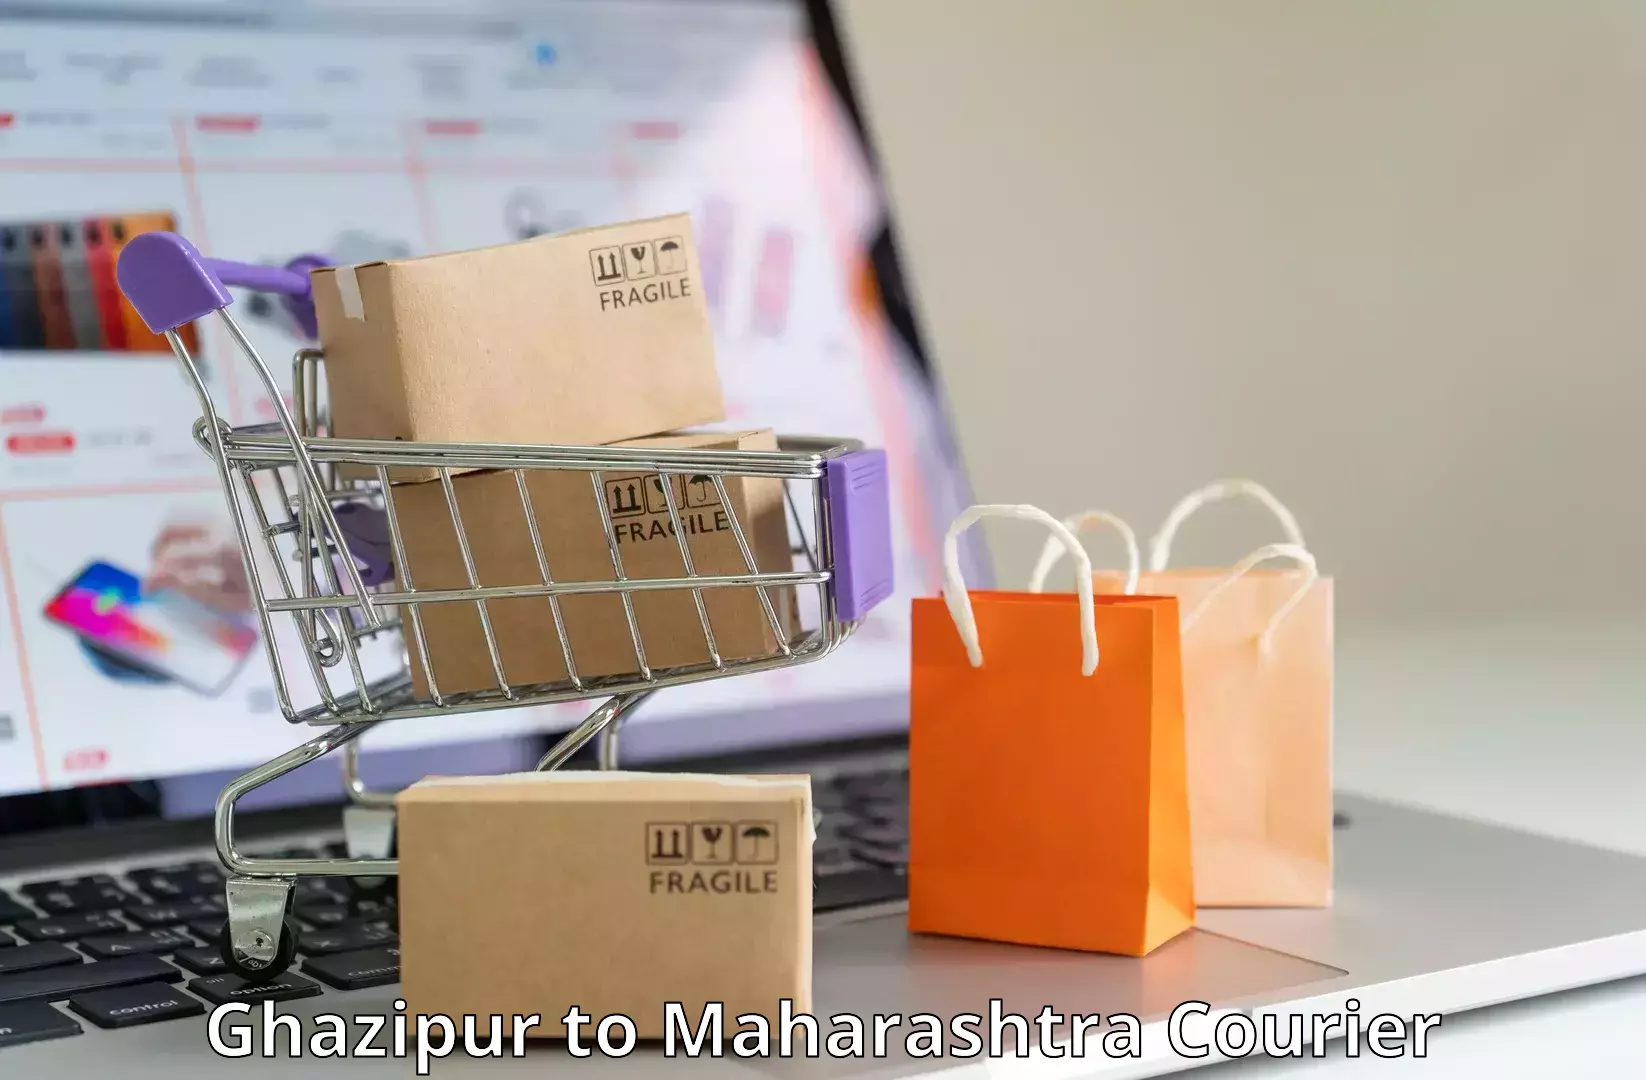 Efficient parcel service in Ghazipur to Dadar